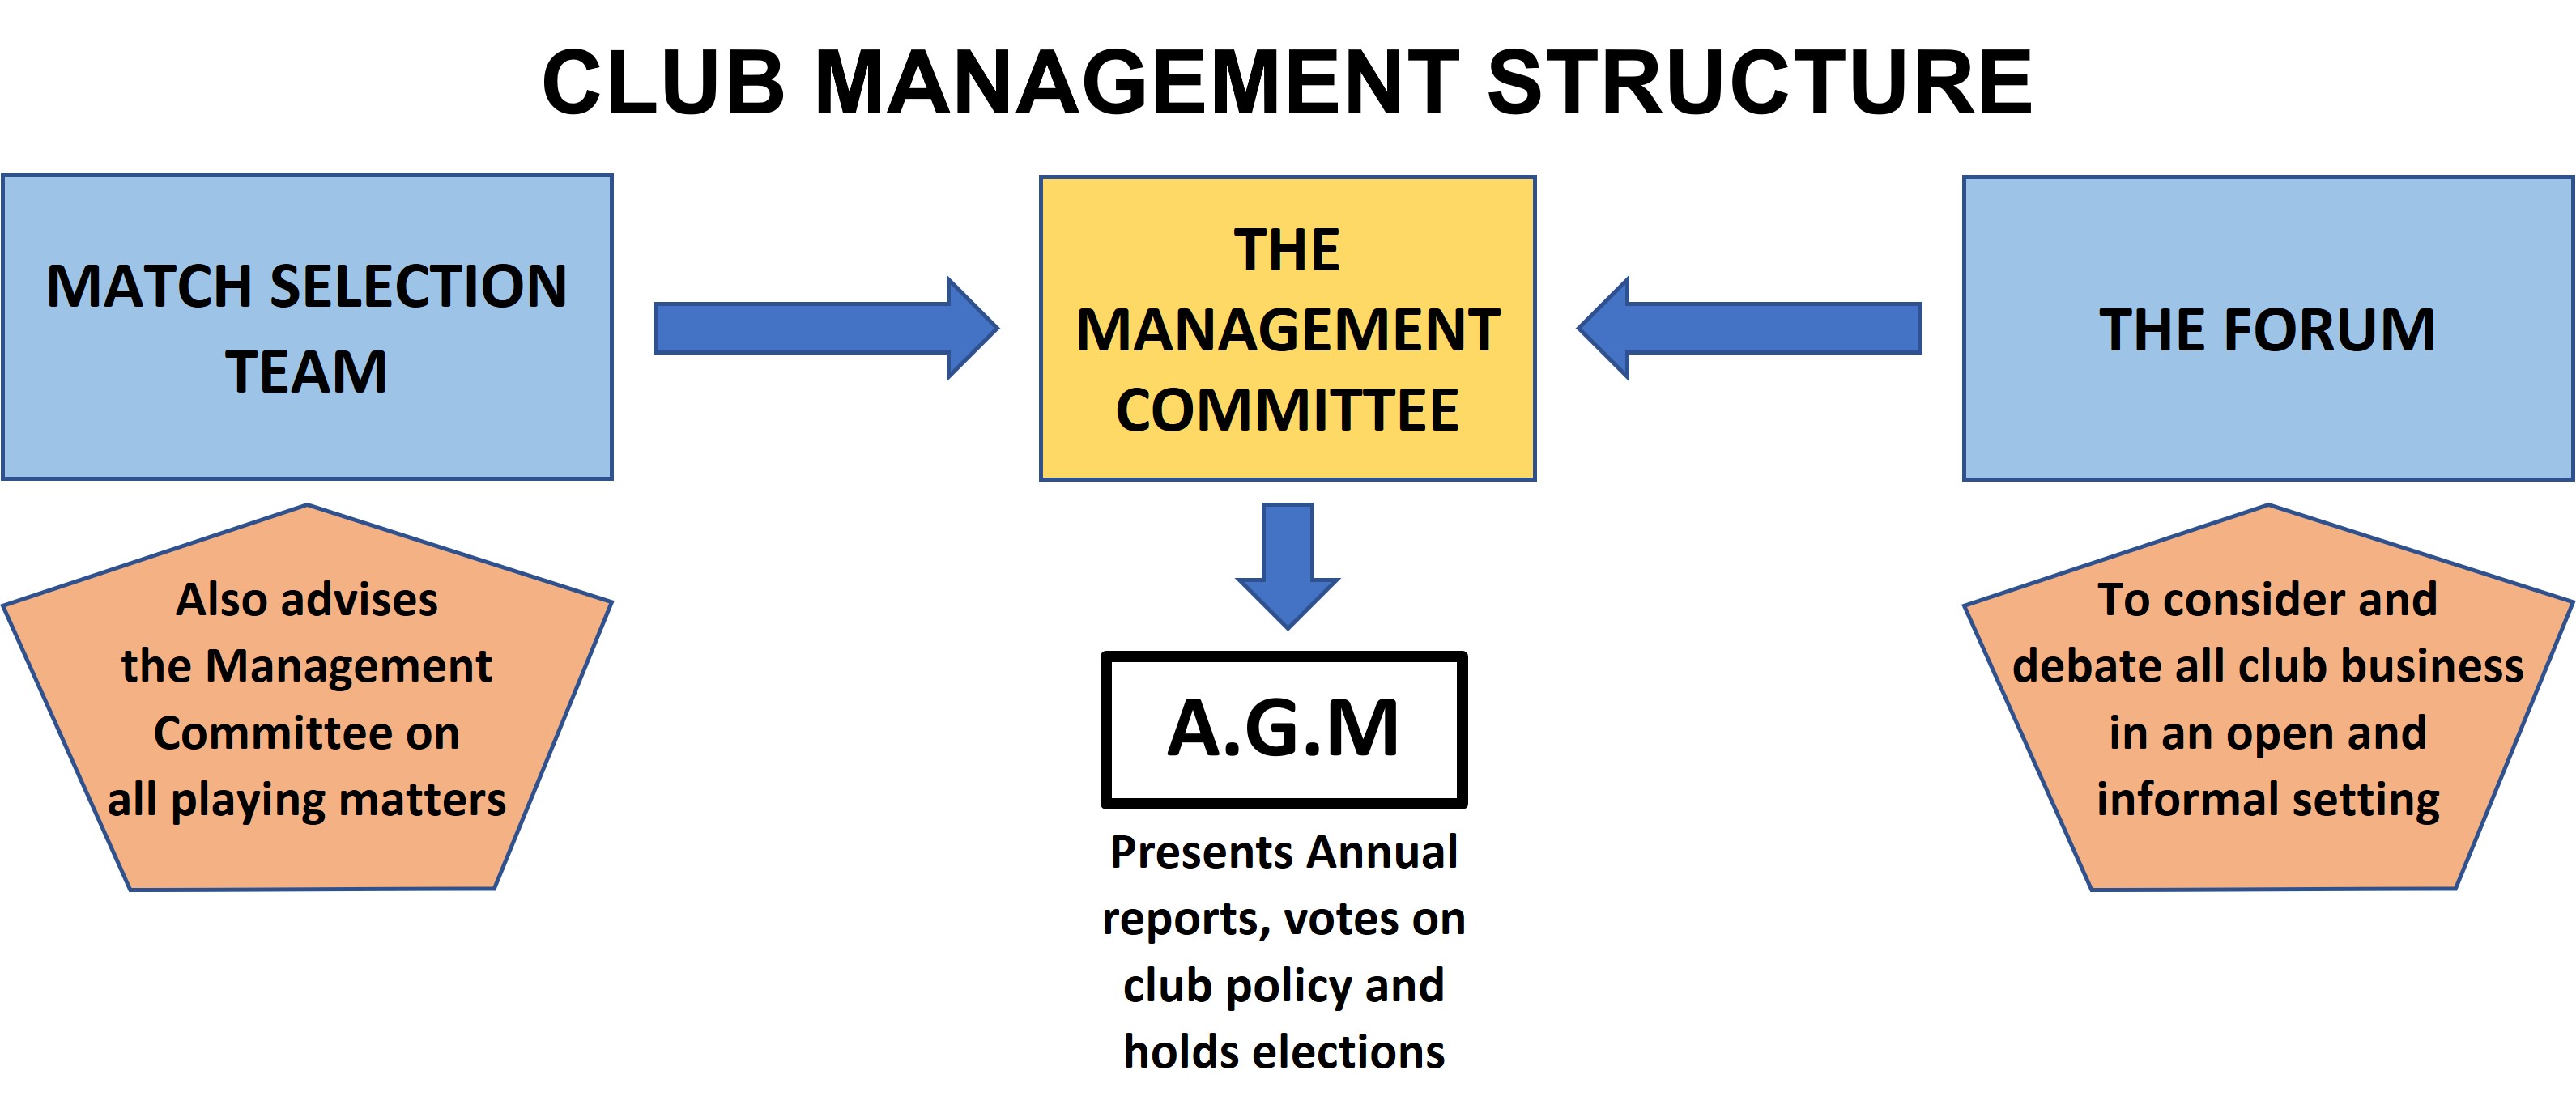 Club management structure diagram